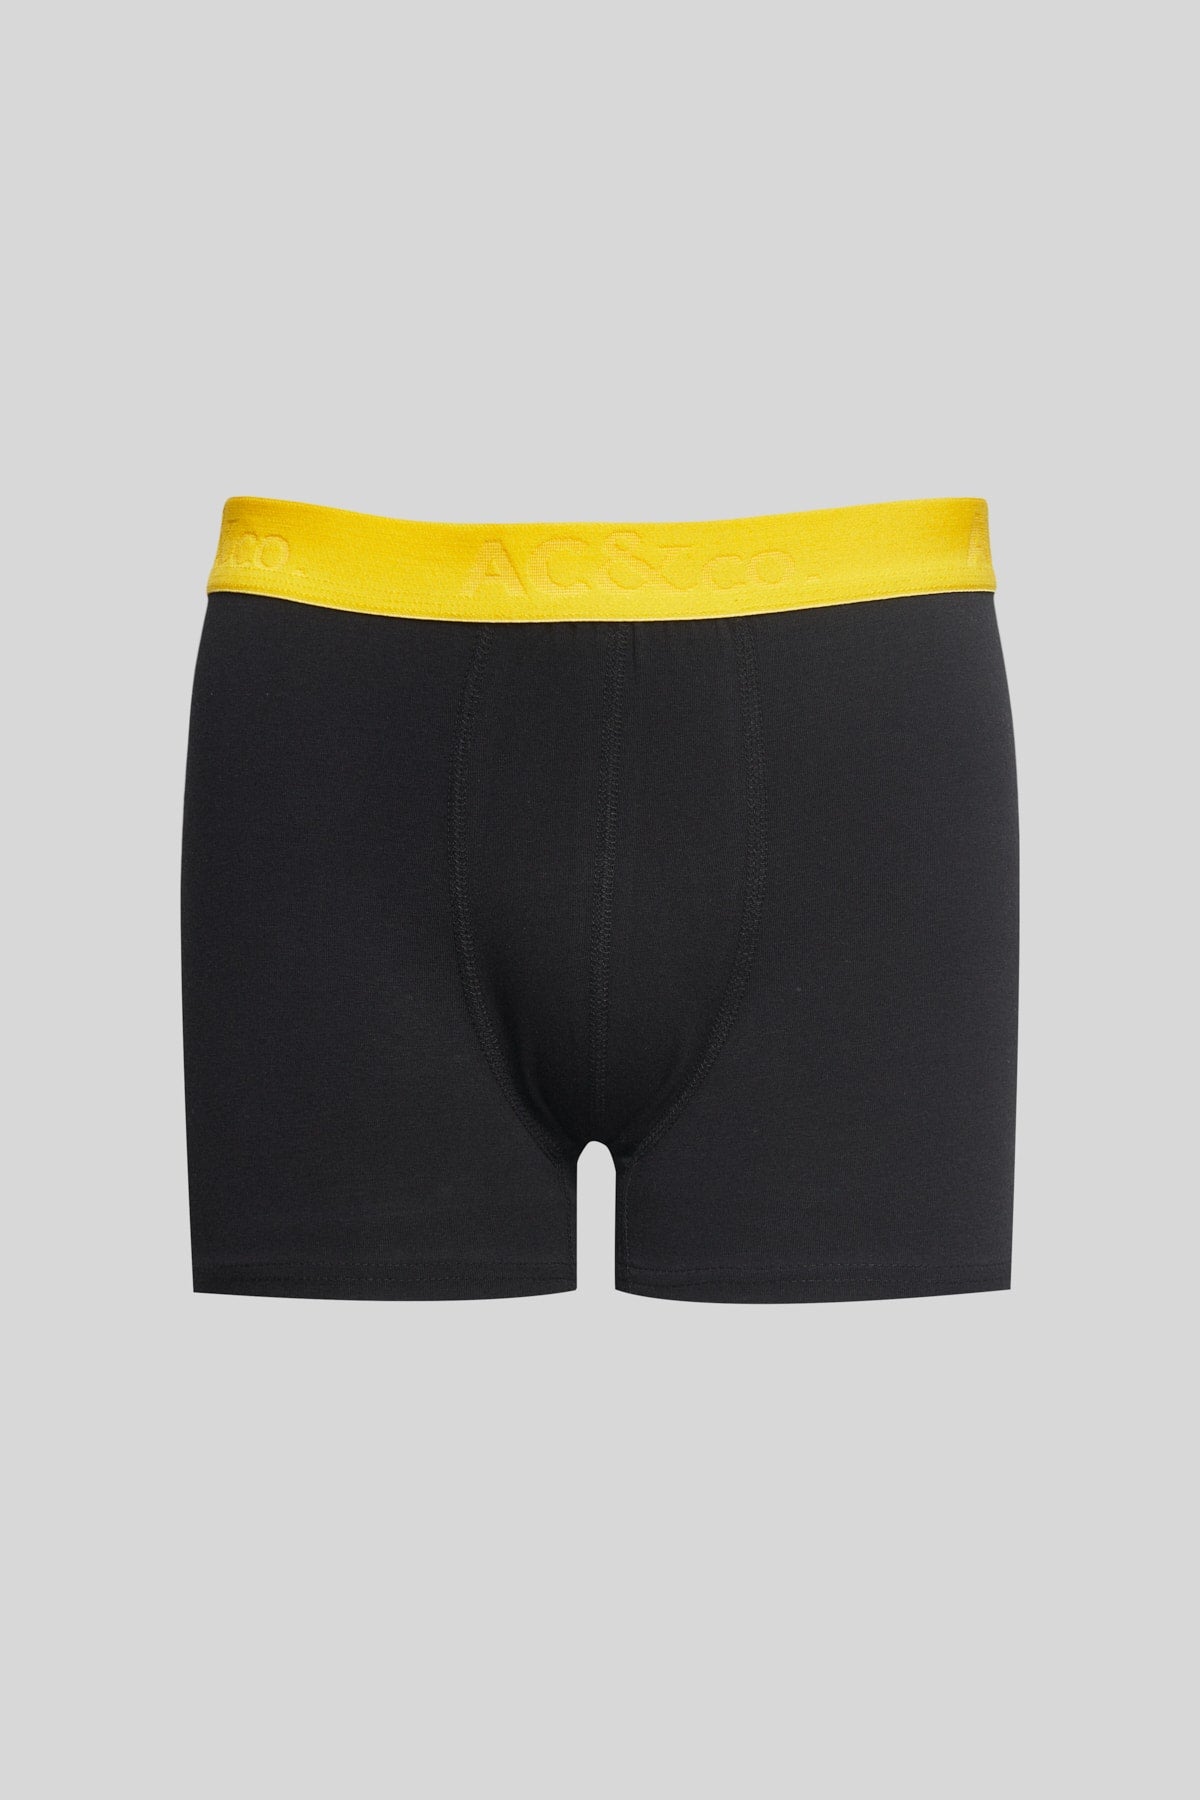 Men's Black-yellow 3-Pack Cotton Flexible Boxer